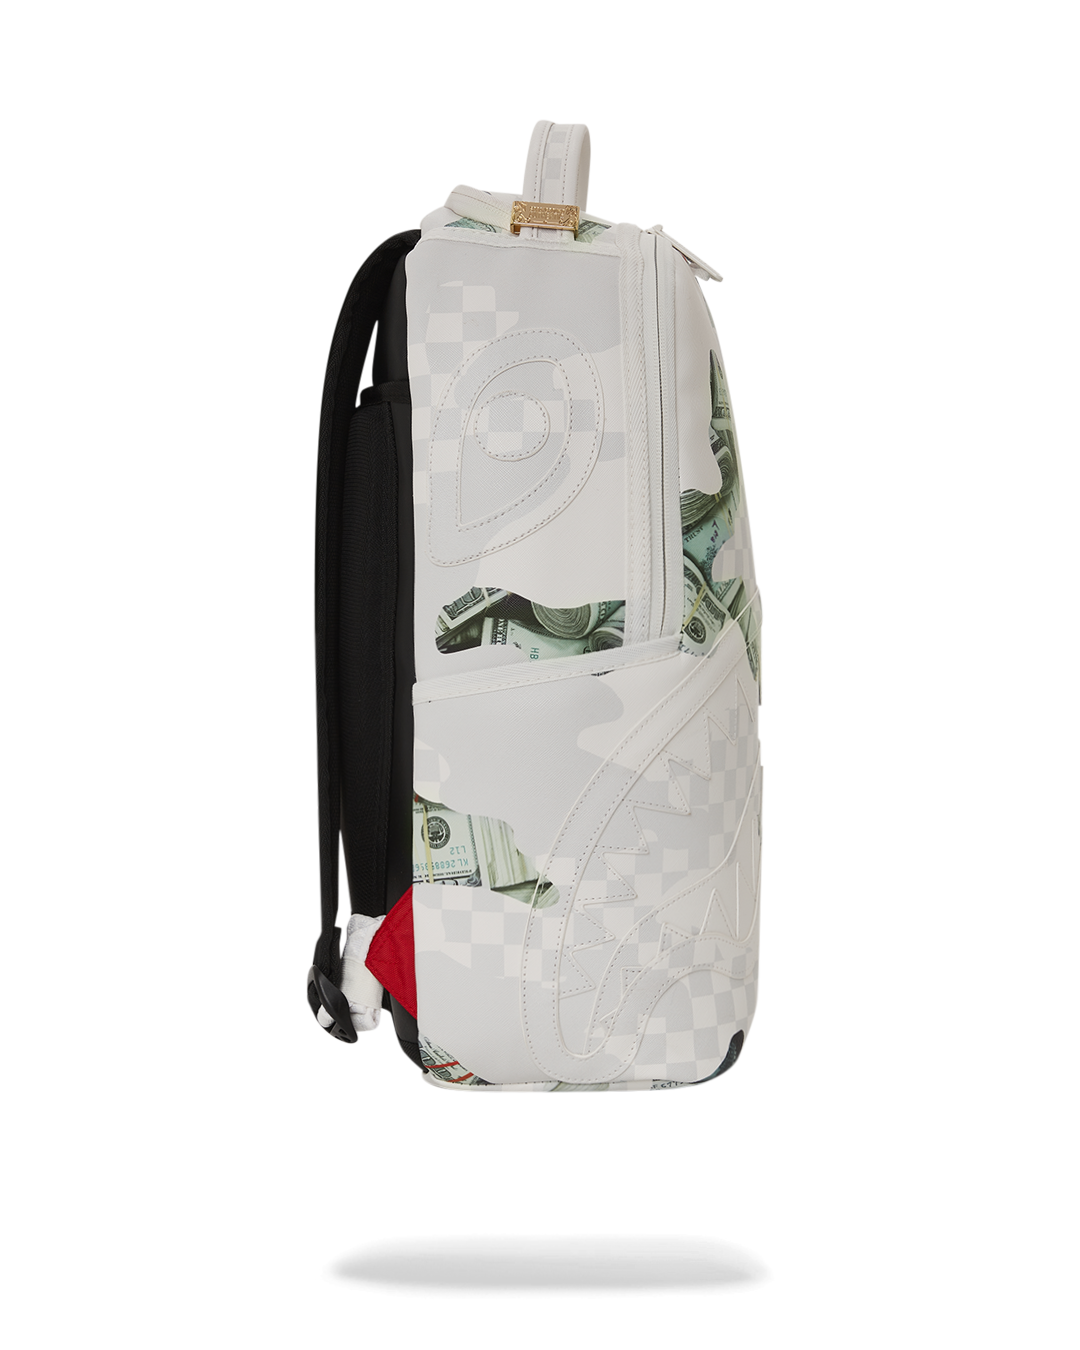 Buy Sprayground Money Rolled Black Duffle Bag at